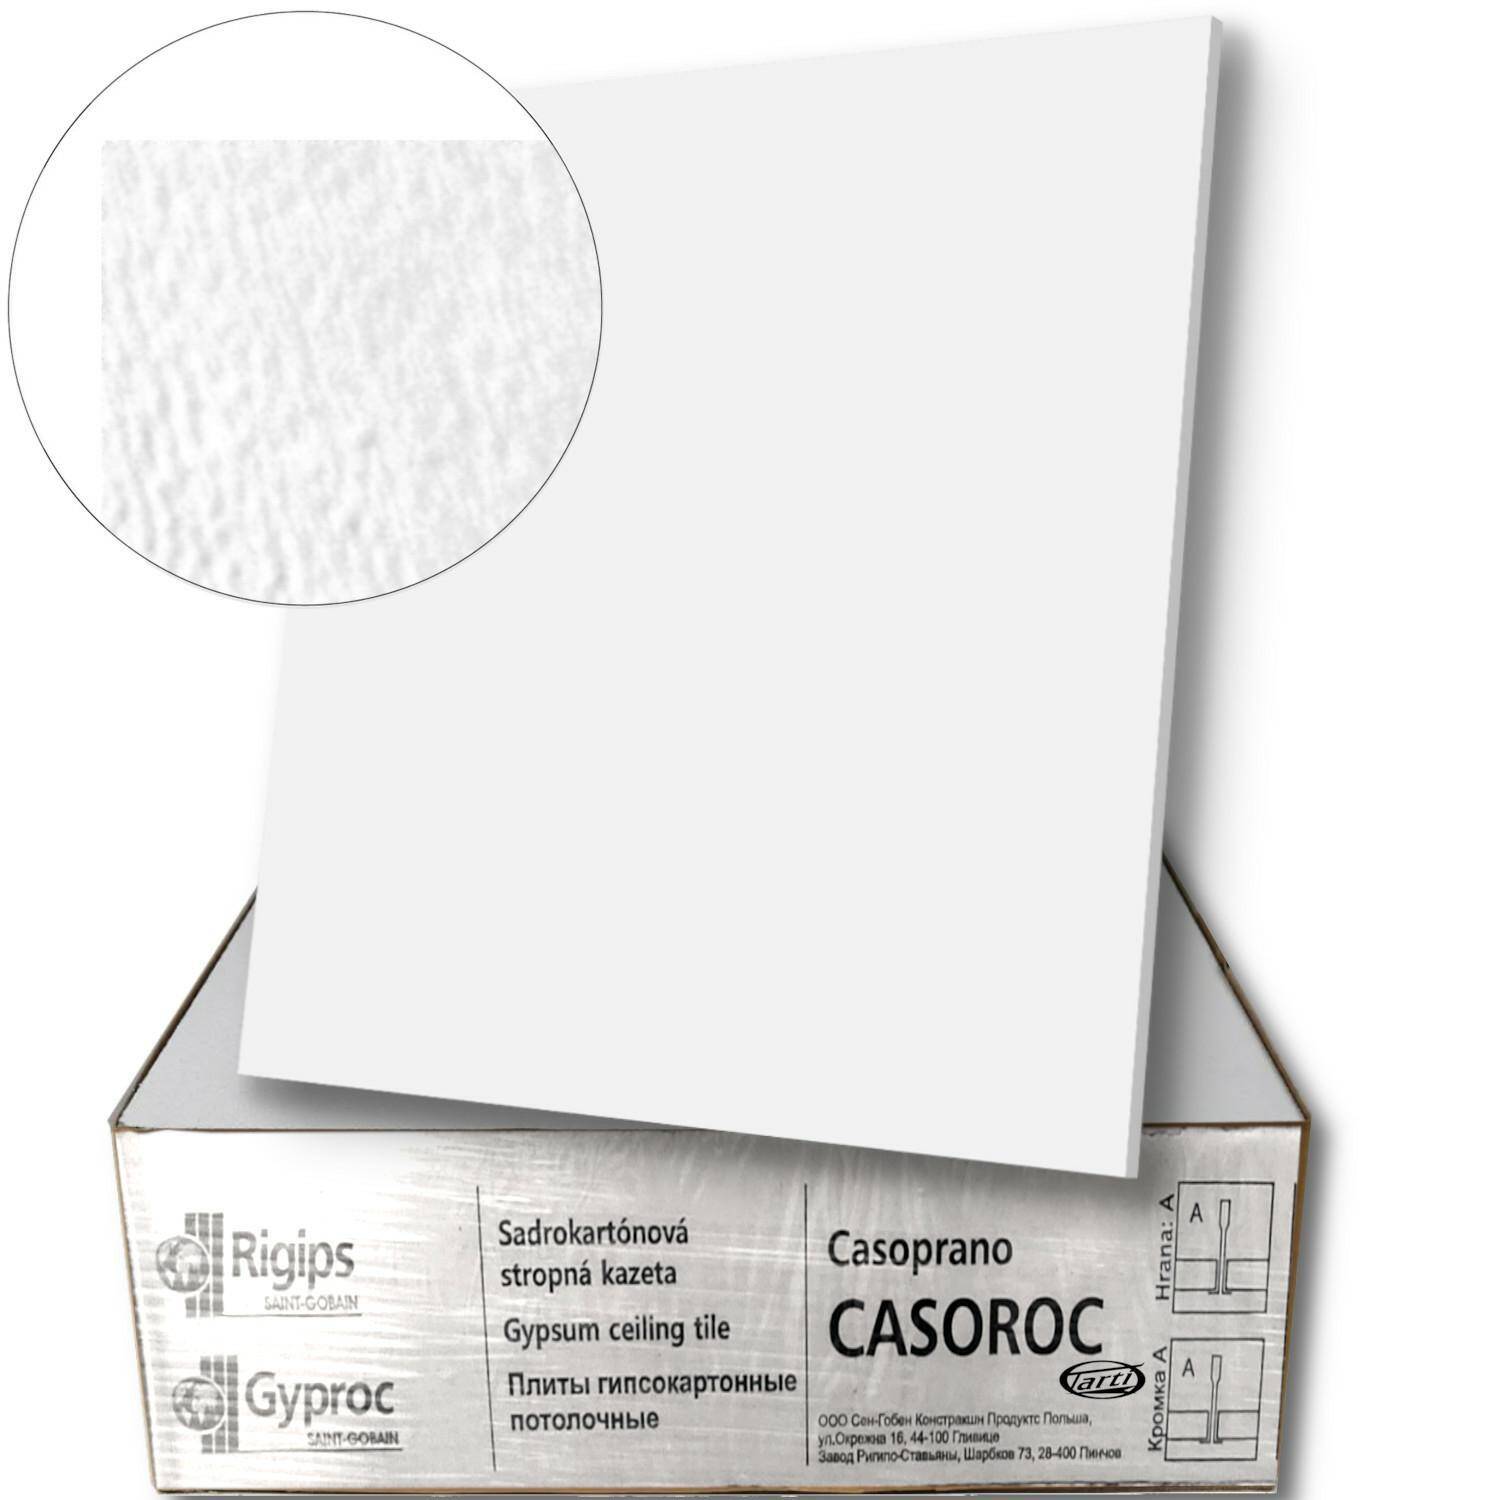 RIGIPS sufit CASOROC kaseton 60x60